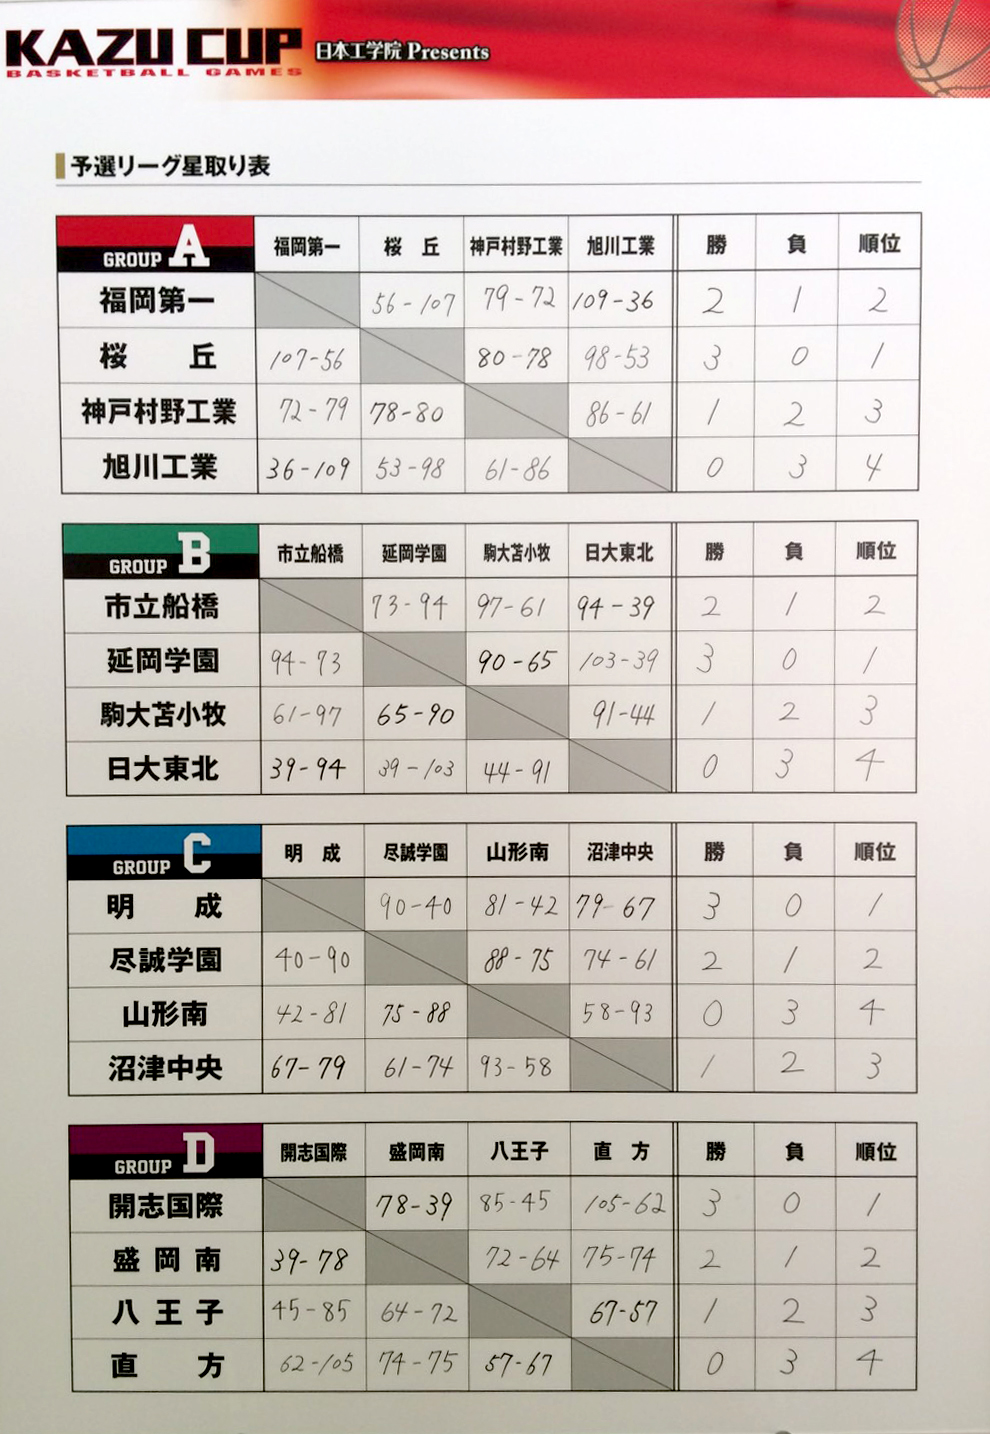 Kazu Cup 17 決勝リーグ結果について キャンパス News Topics 就職 業界デビュー 資格取得なら東京の専門学校 日本工学院